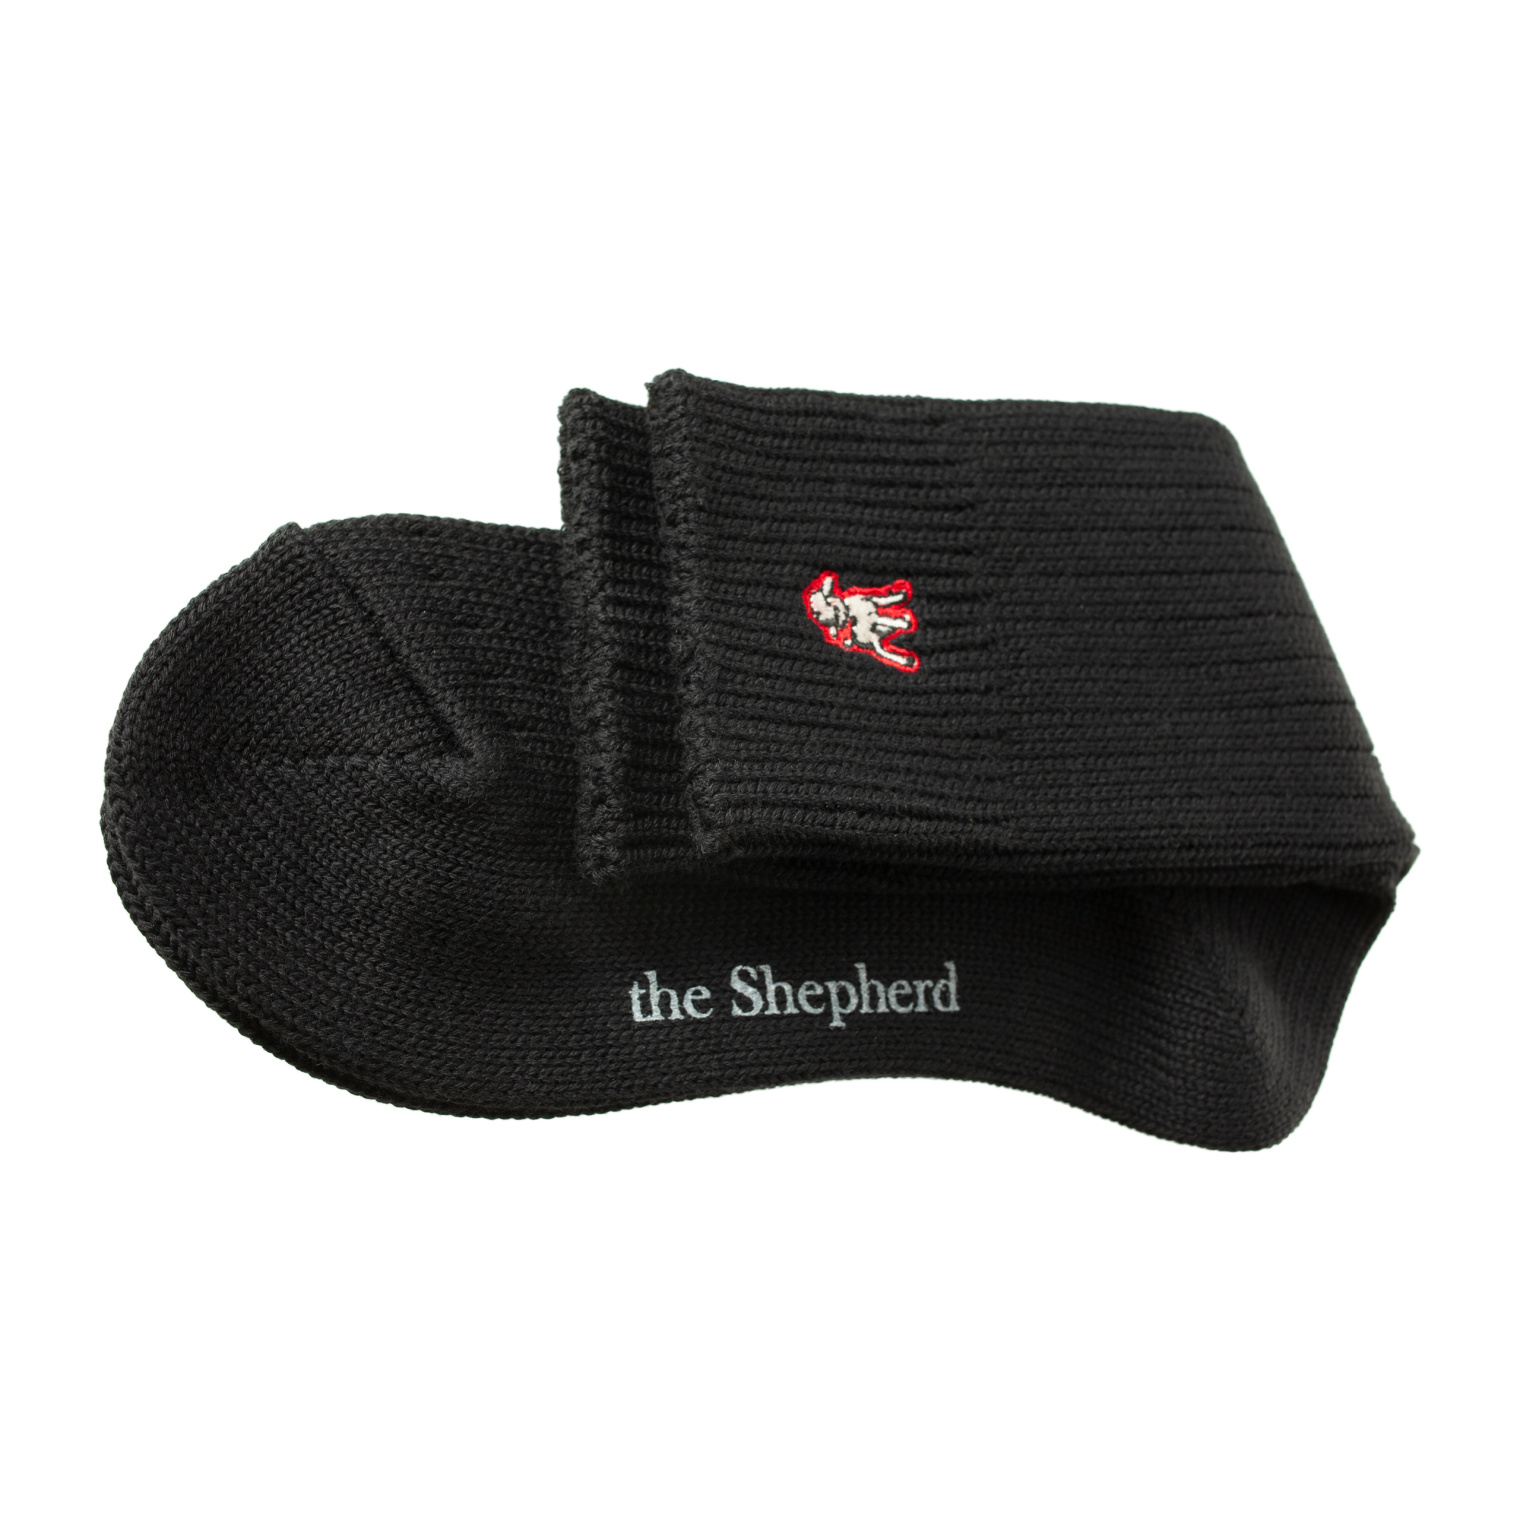 Undercover Black embroidered socks